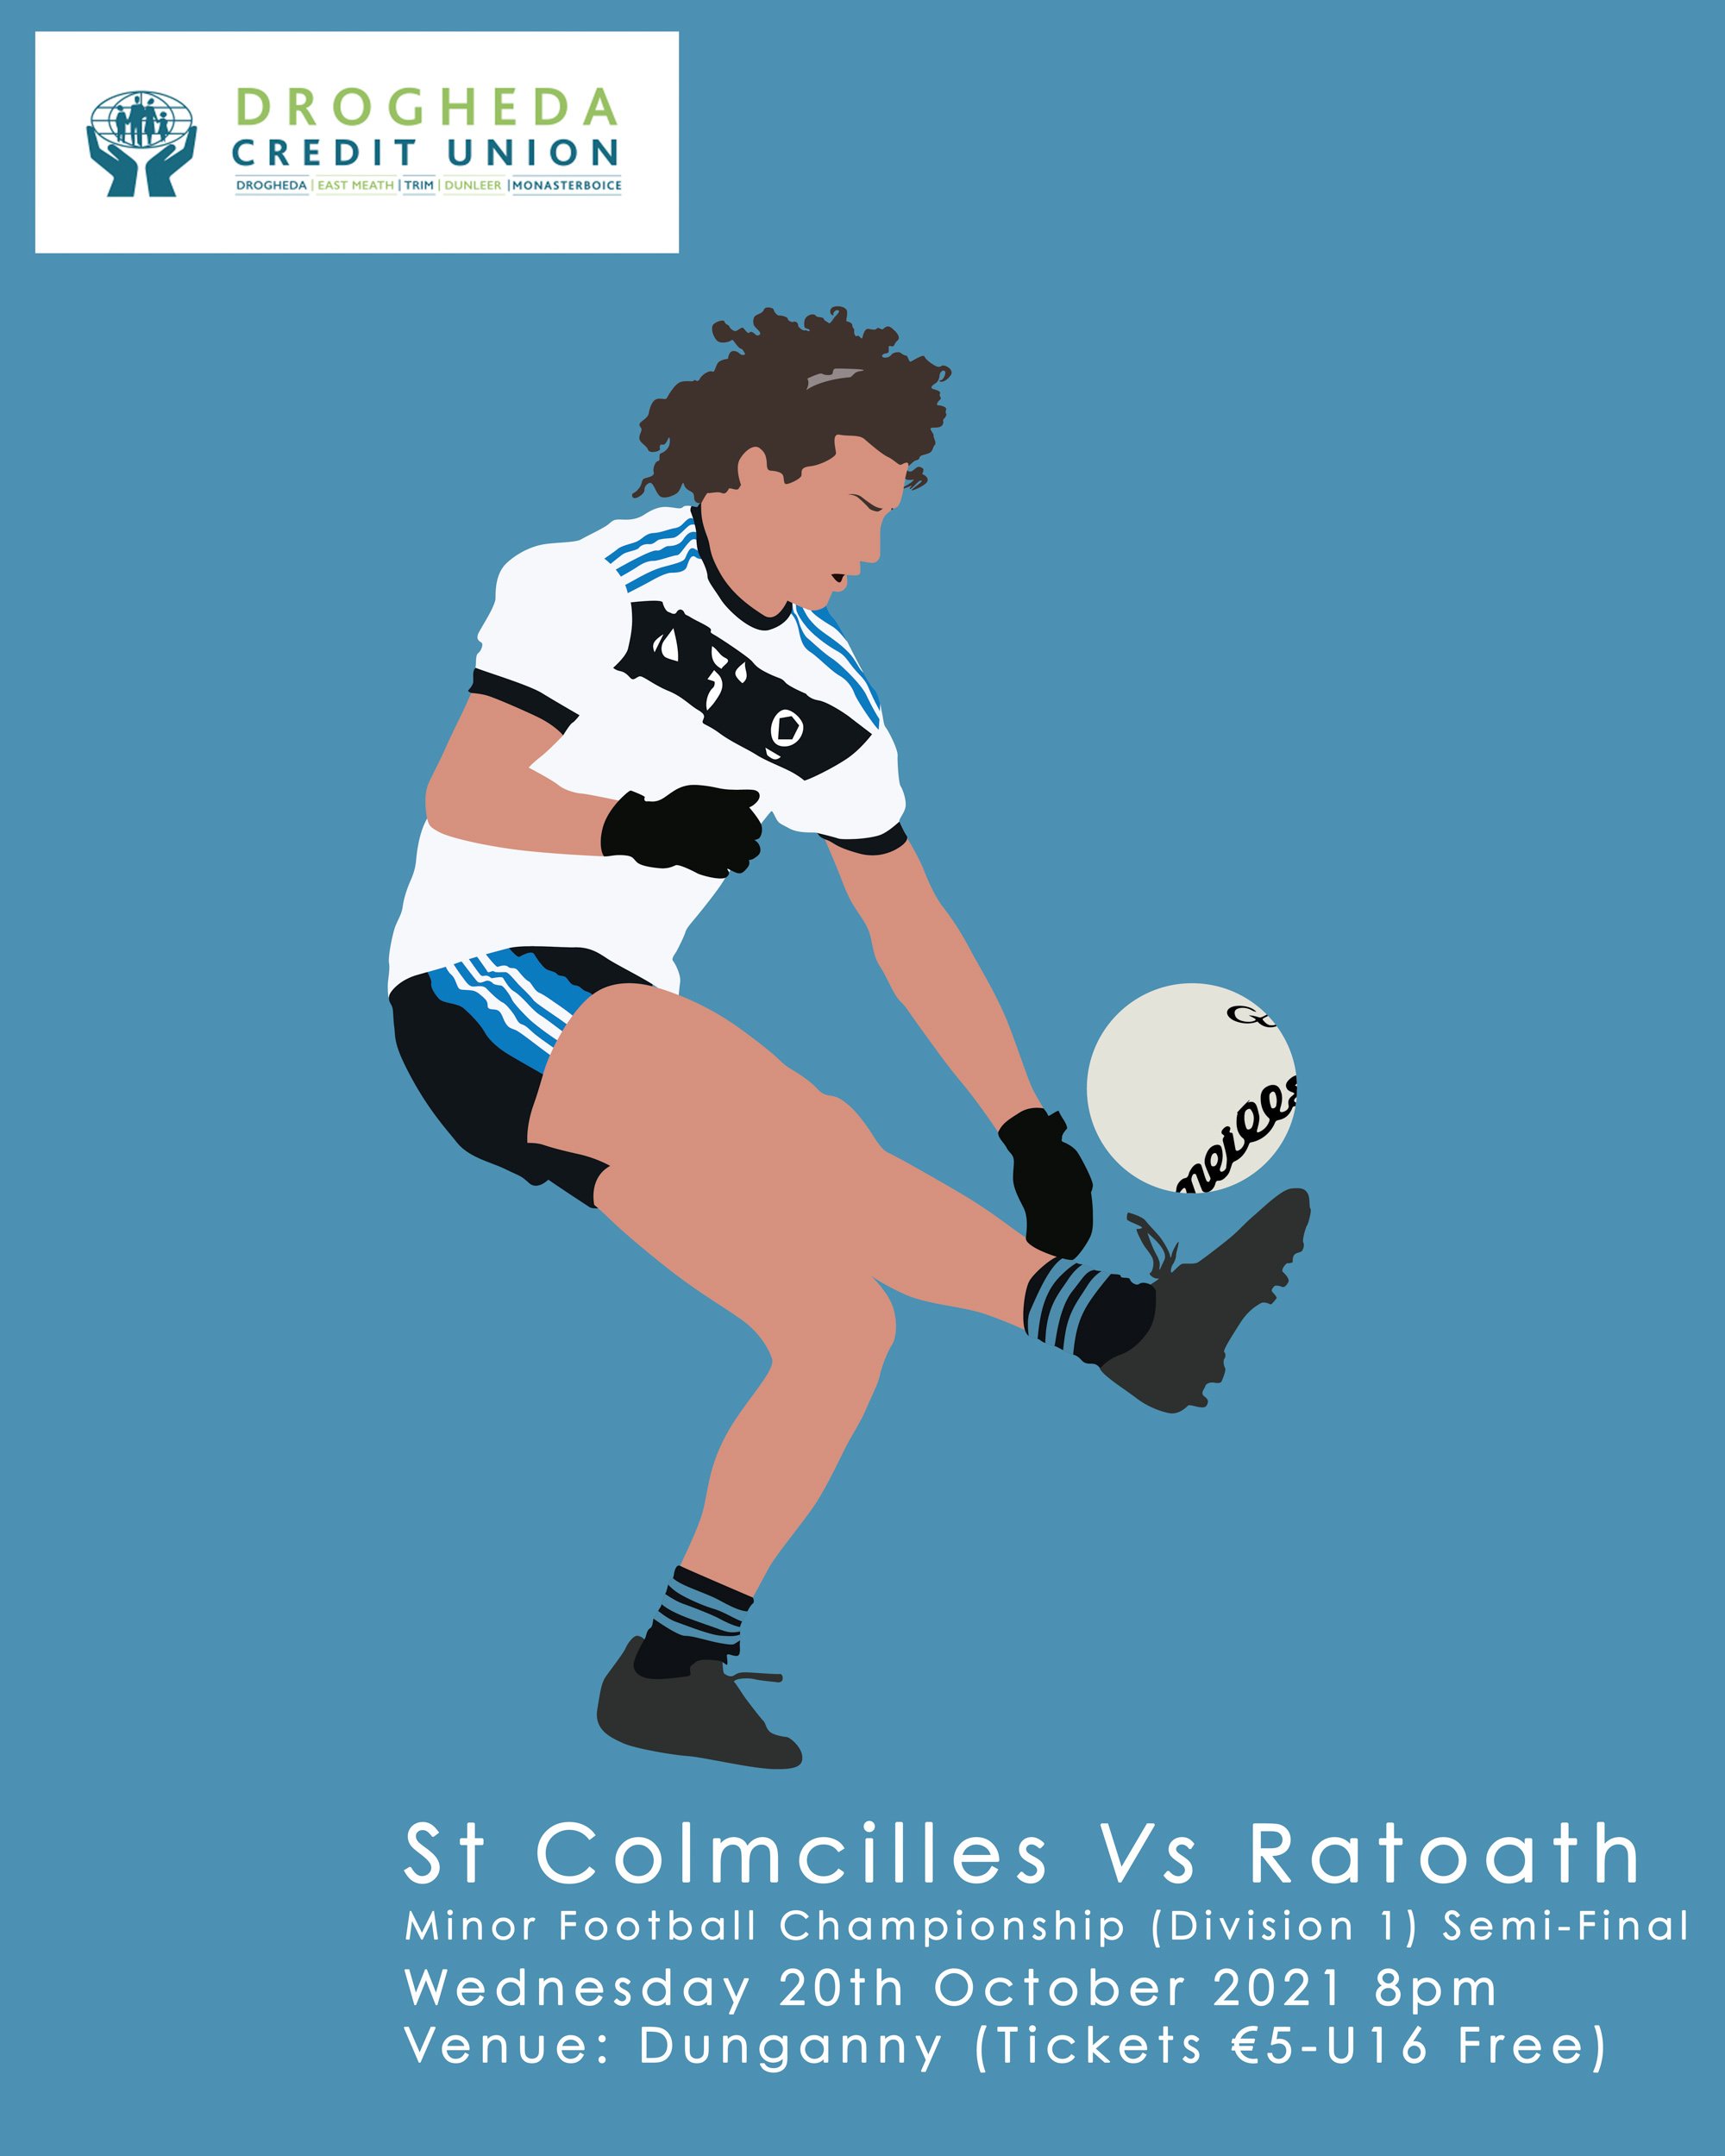 GAA Sports Poster Design - Brian Mulligan - Meath - Dublin-7.jpg